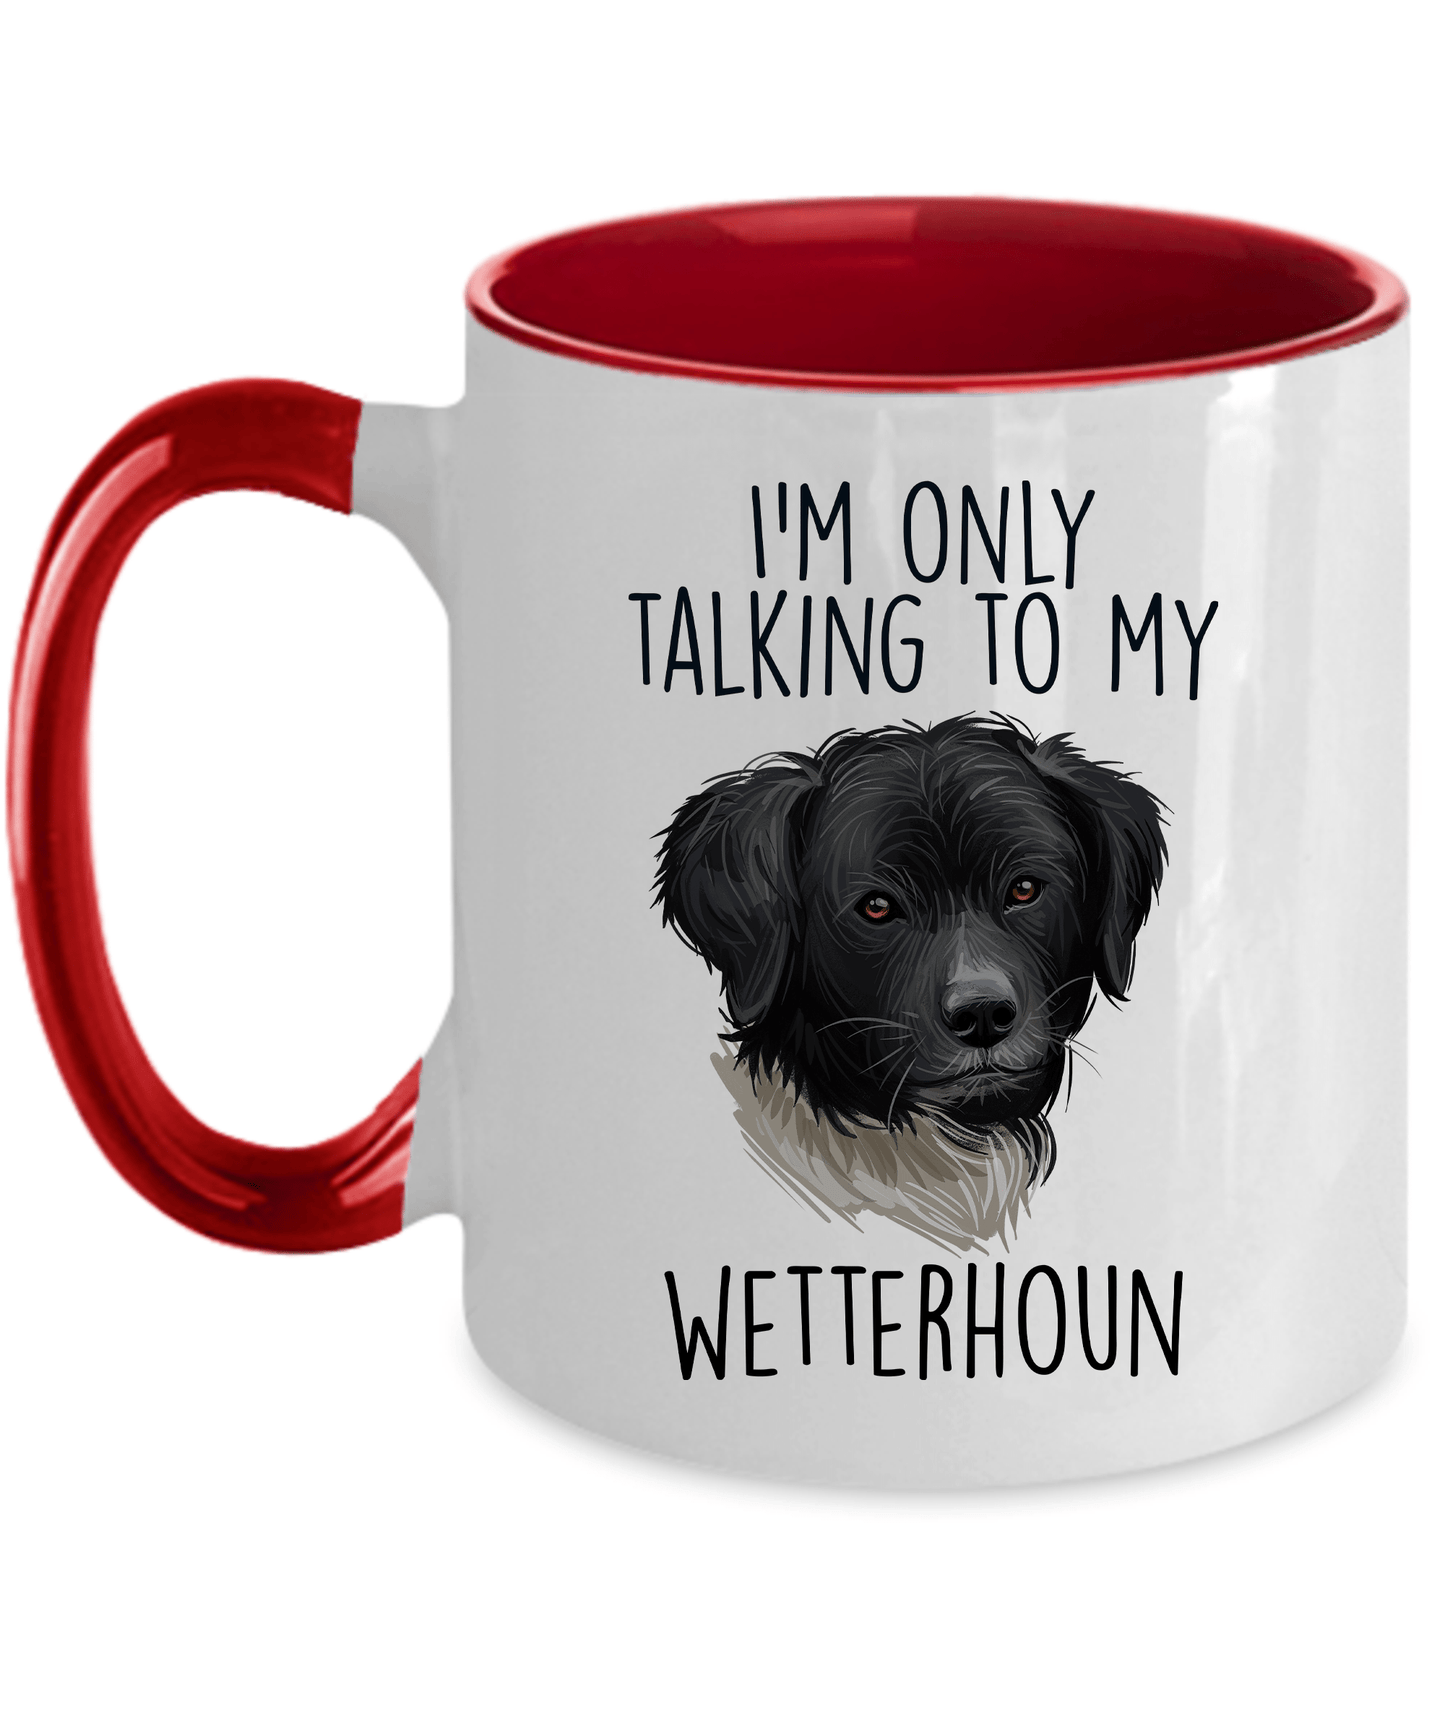 Wetterhoun Dog Custom Ceramic Coffee Mug I'm only Talking to my Wetterhoun Dog